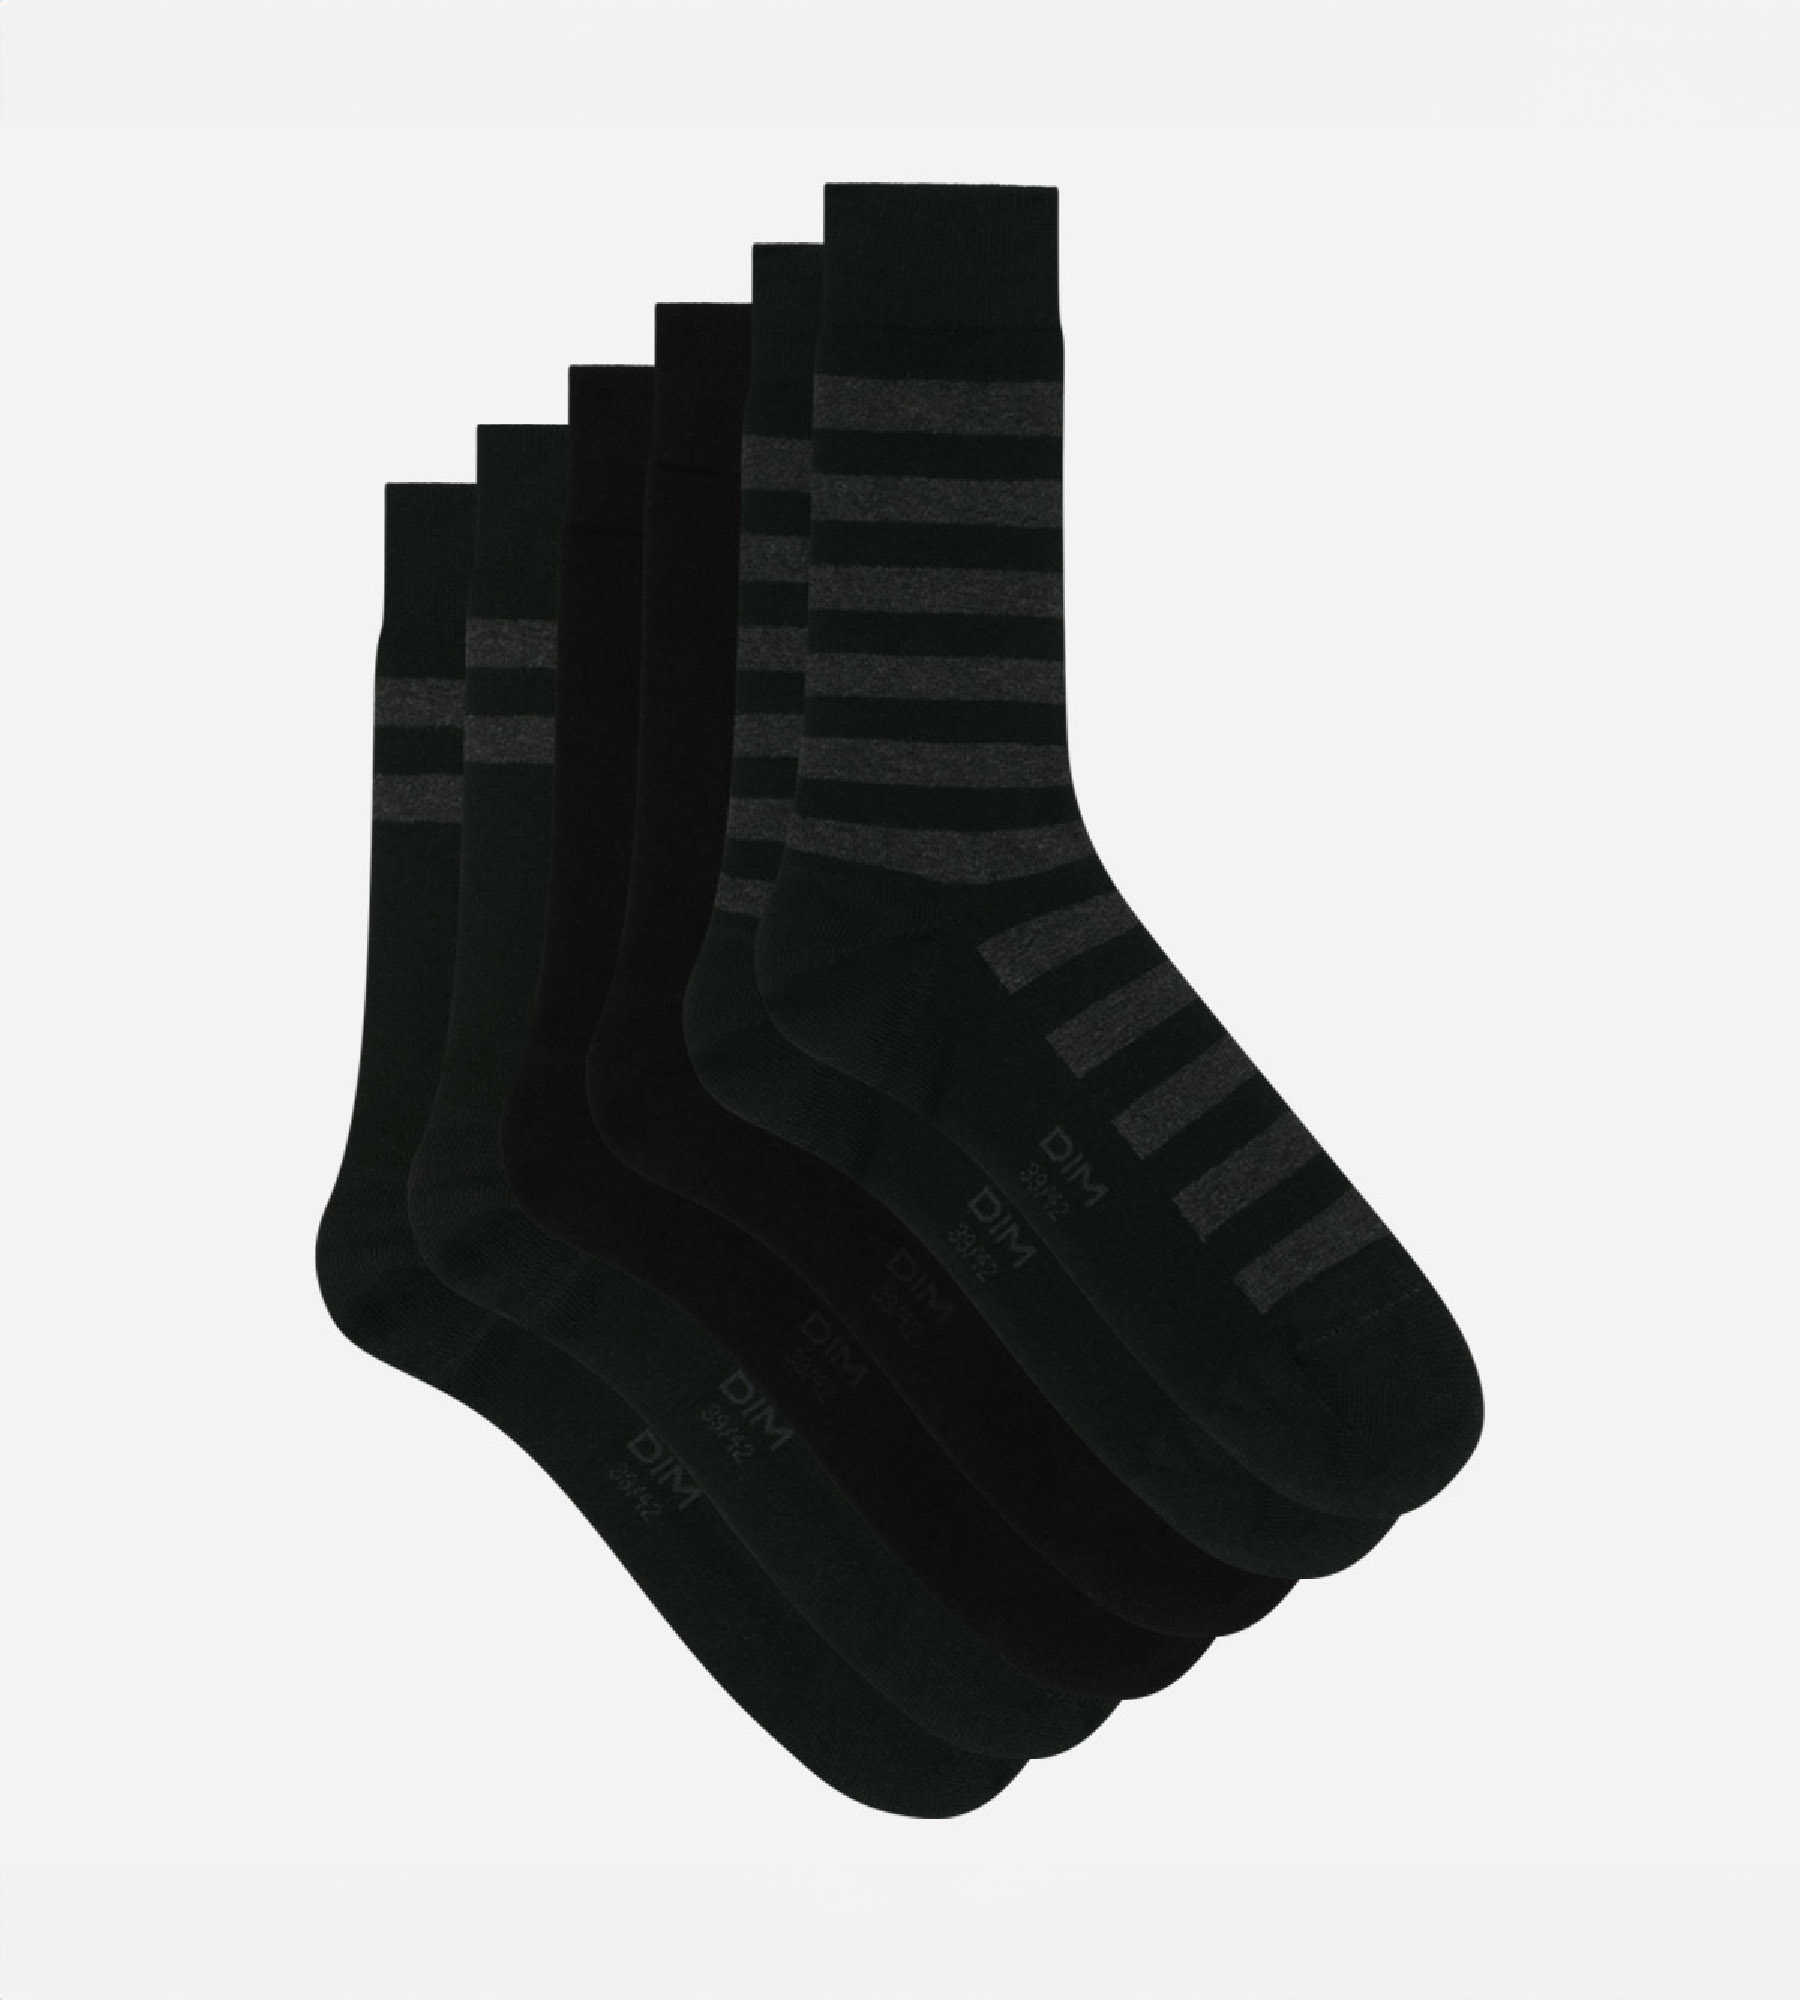 JCB - Paquete de calcetines negros para hombre, 8 pares, talla 7-12 de EE.  UU., calcetines para botas, calcetines reforzados, paquete múltiple, Negro